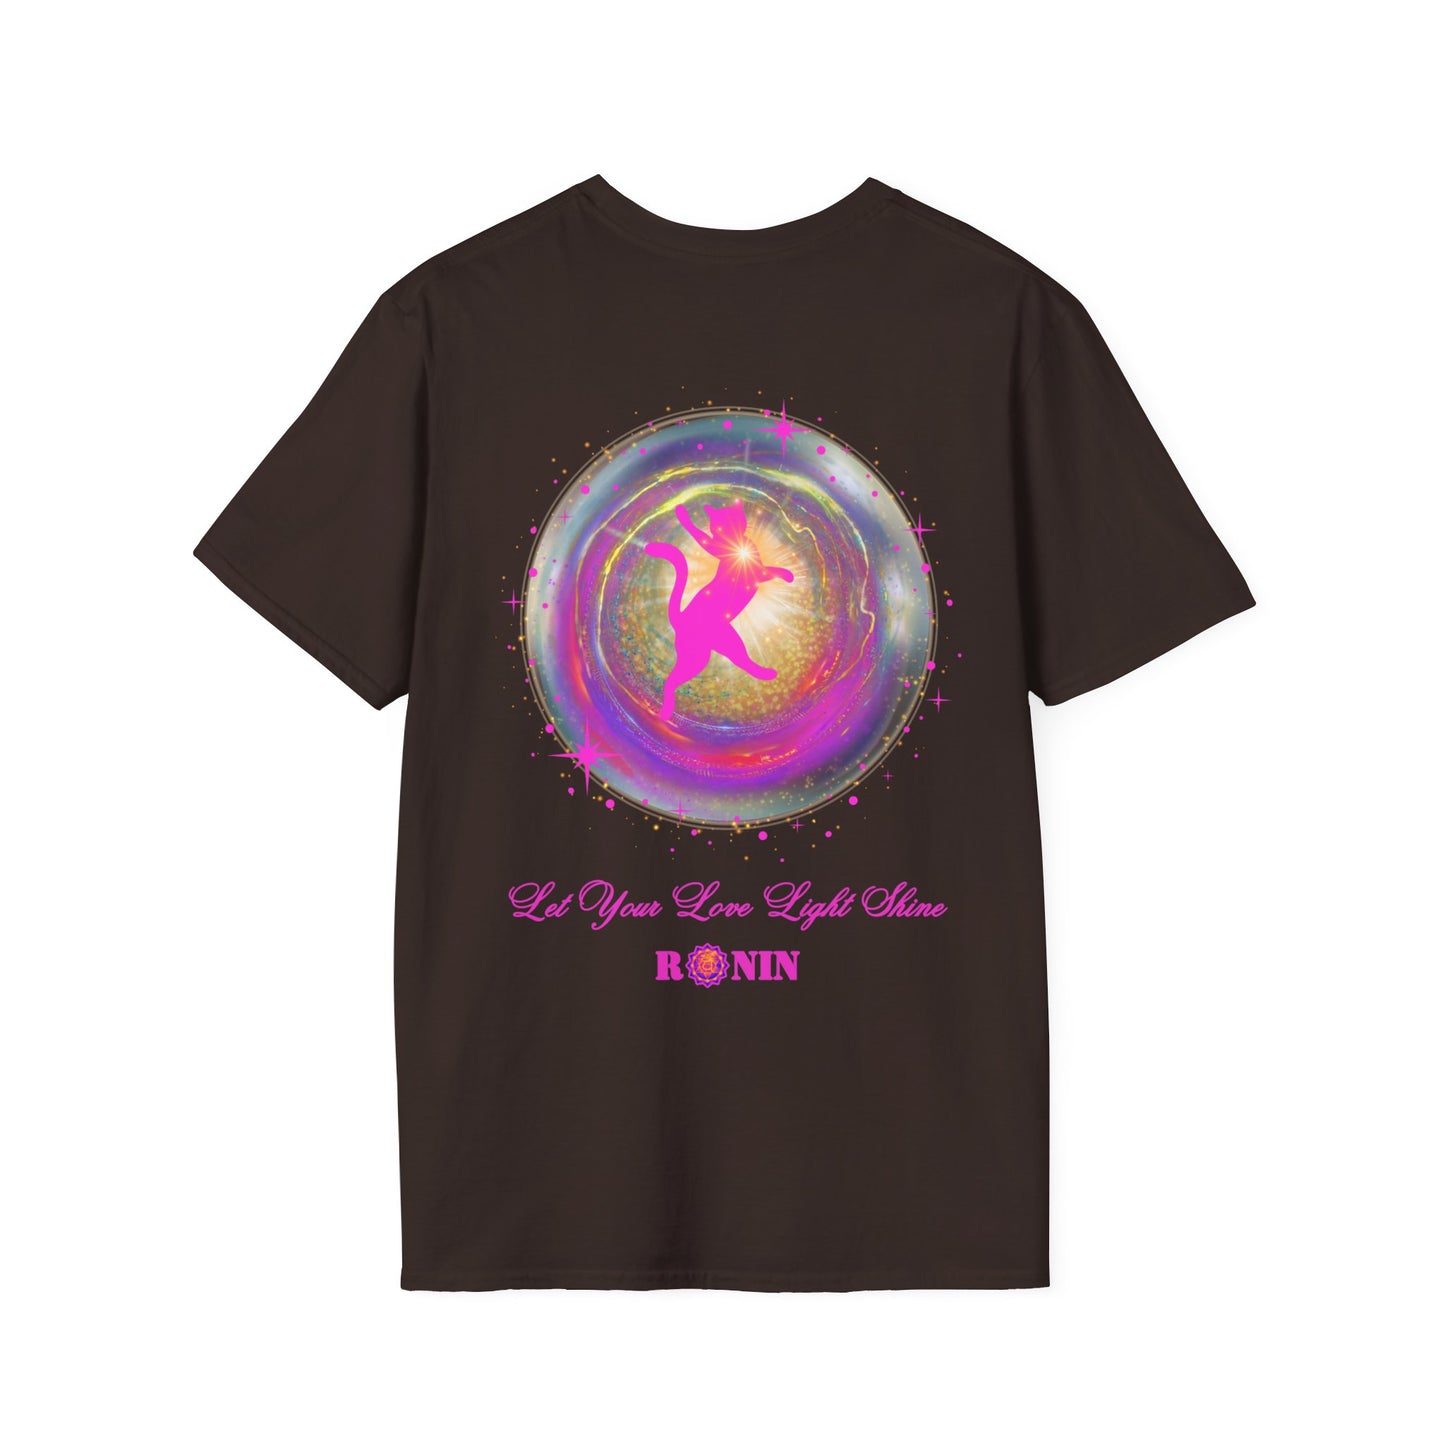 CAT LOVE LIGHT - Unisex Softstyle T-Shirt